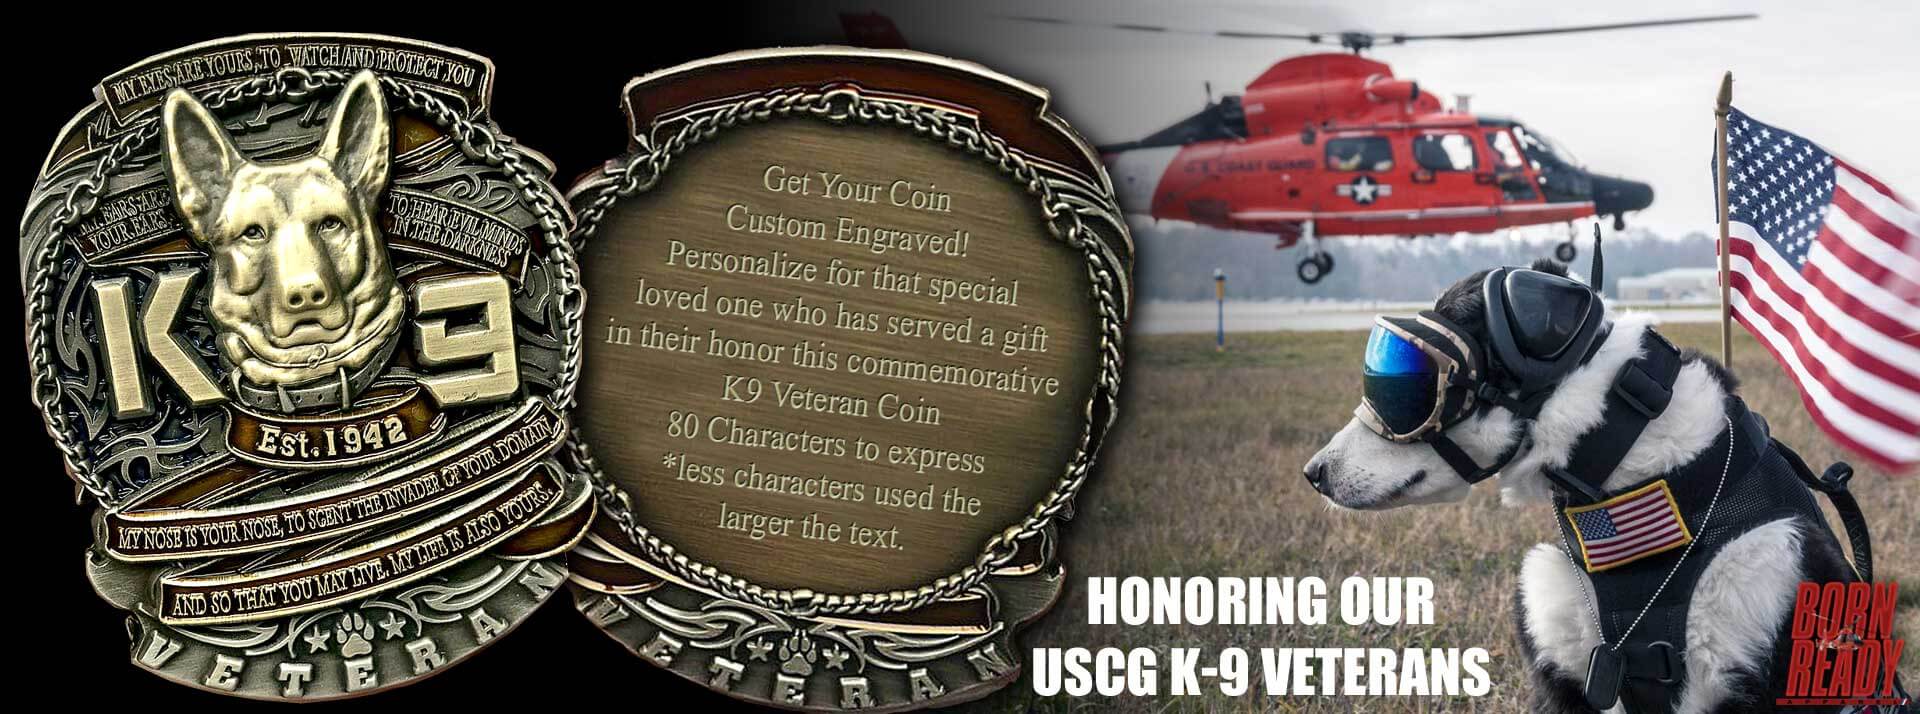 K-9 veterans USCG